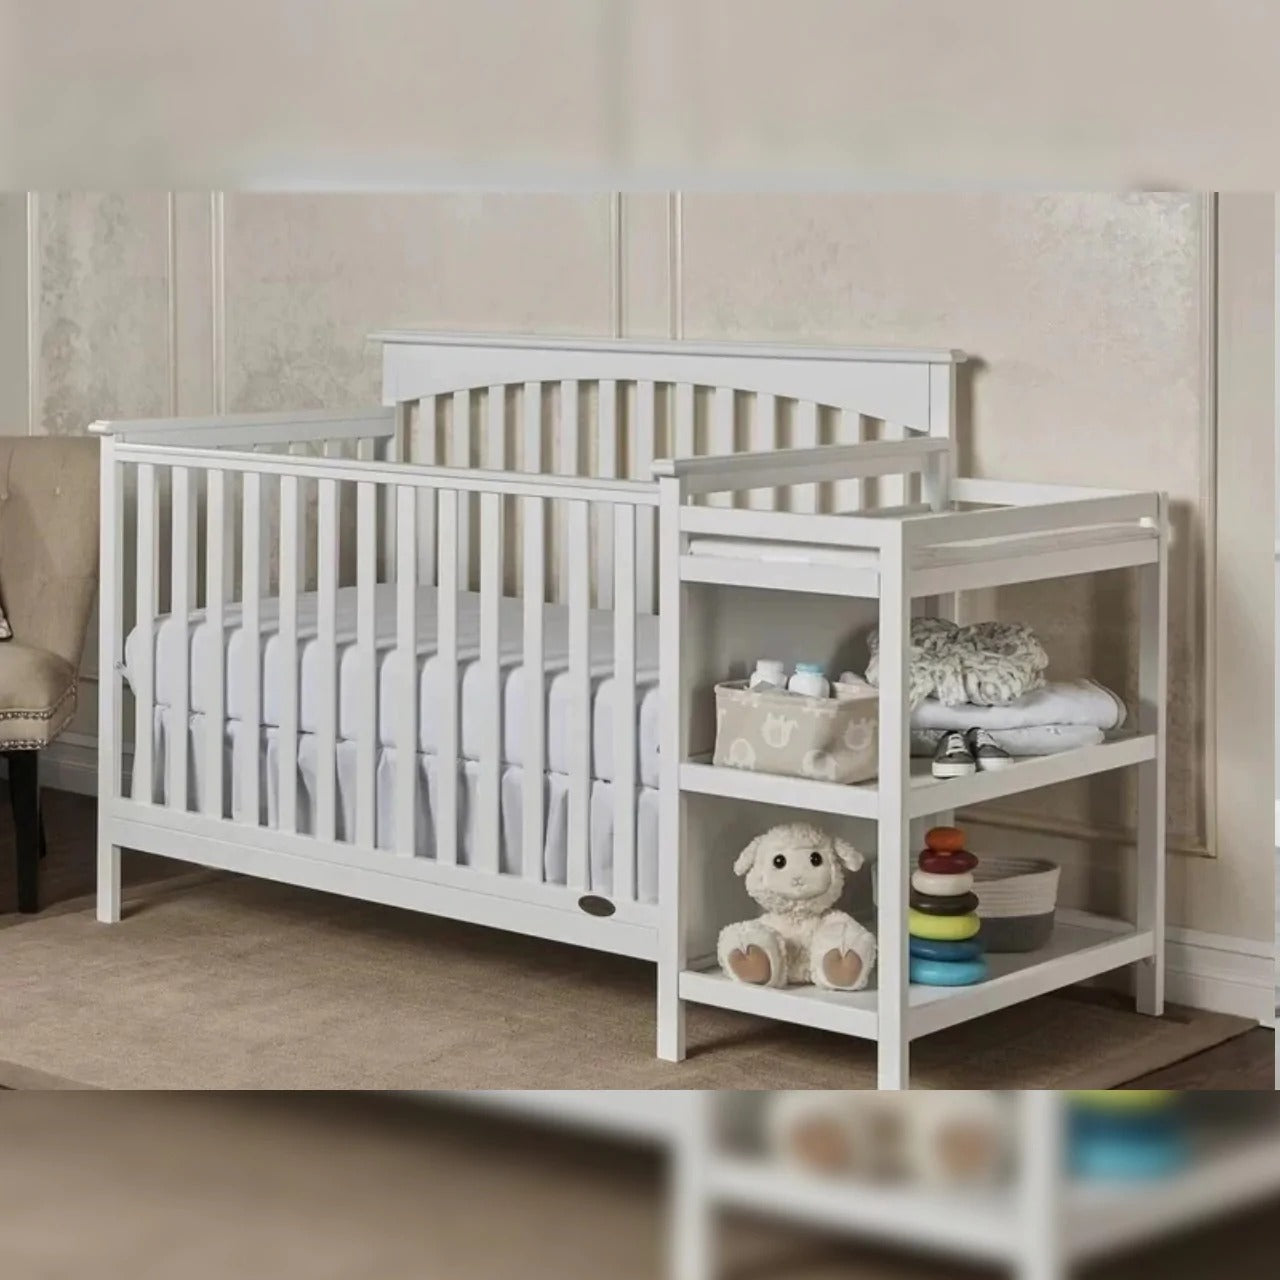 Cribs, Baby Cribs, Cribs Mini, Mini Cribs, Cribs Bumpers, Cribs Mettress, Cribs Sheets, Wooden Cradle, Swinging Cradle, Crib Decor, Crib Bumpers, Cot Bumpers, Portable Crib